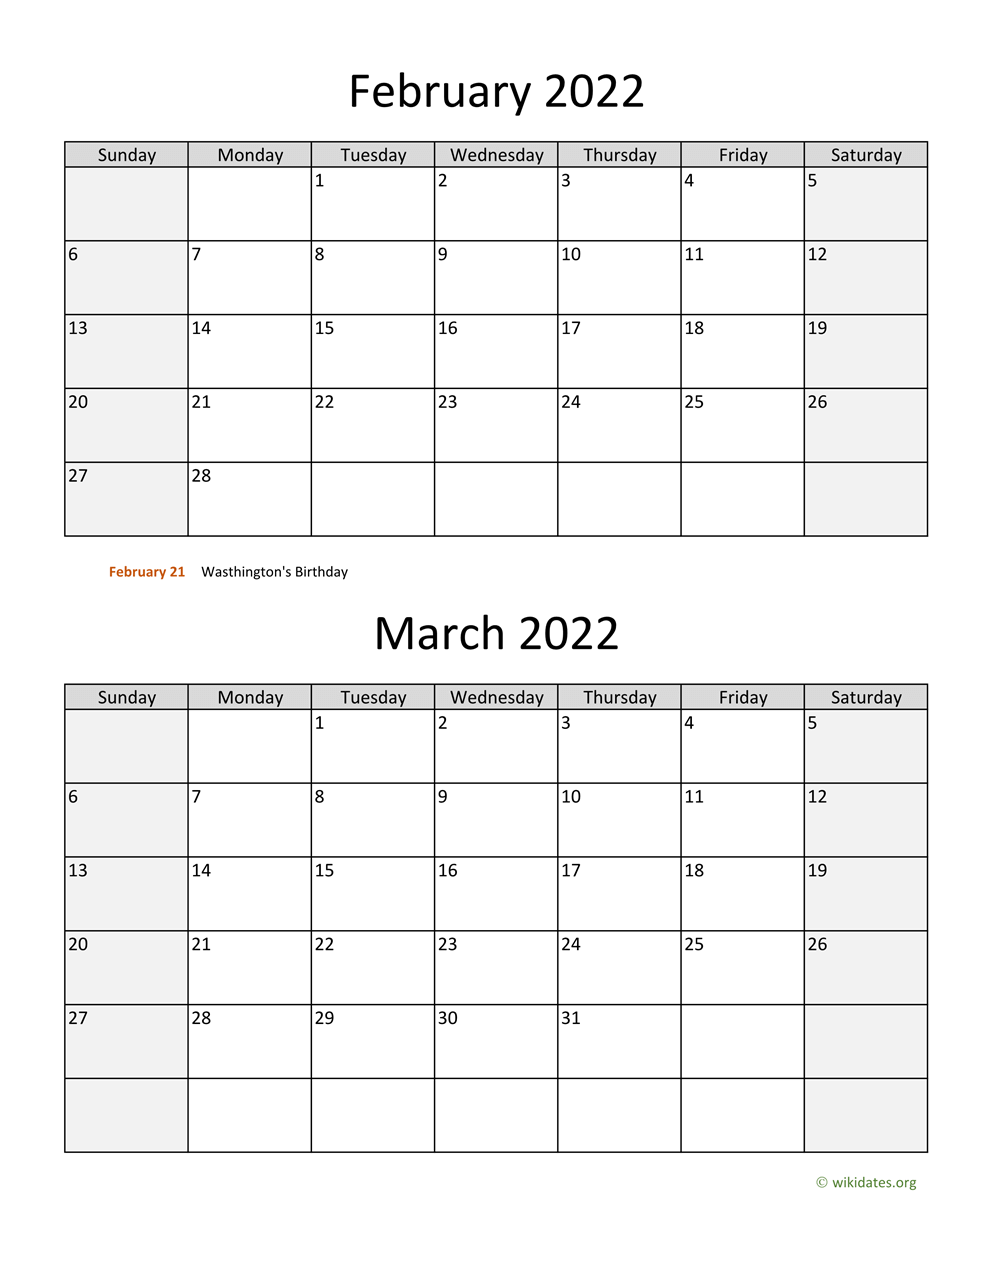 February And March 2022 Calendar Printable February And March 2022 Calendar | Wikidates.org